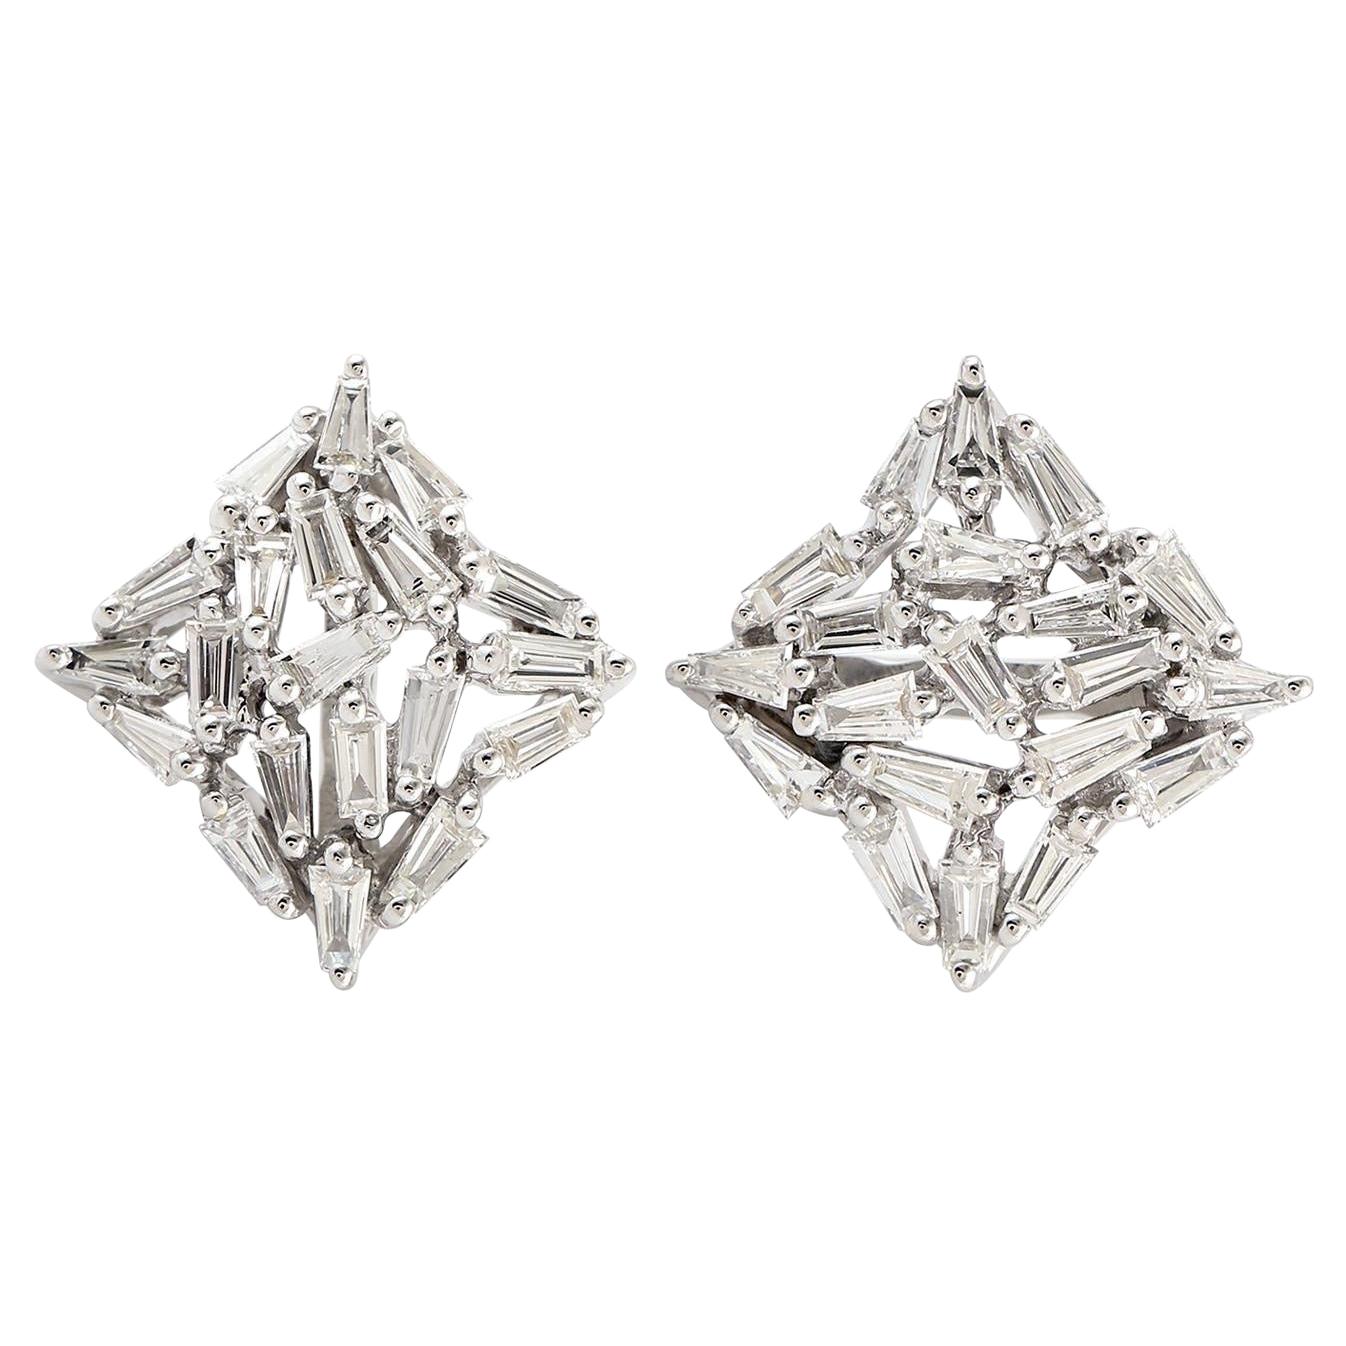 18 Karat Gold Baguette Diamond Stud Earrings